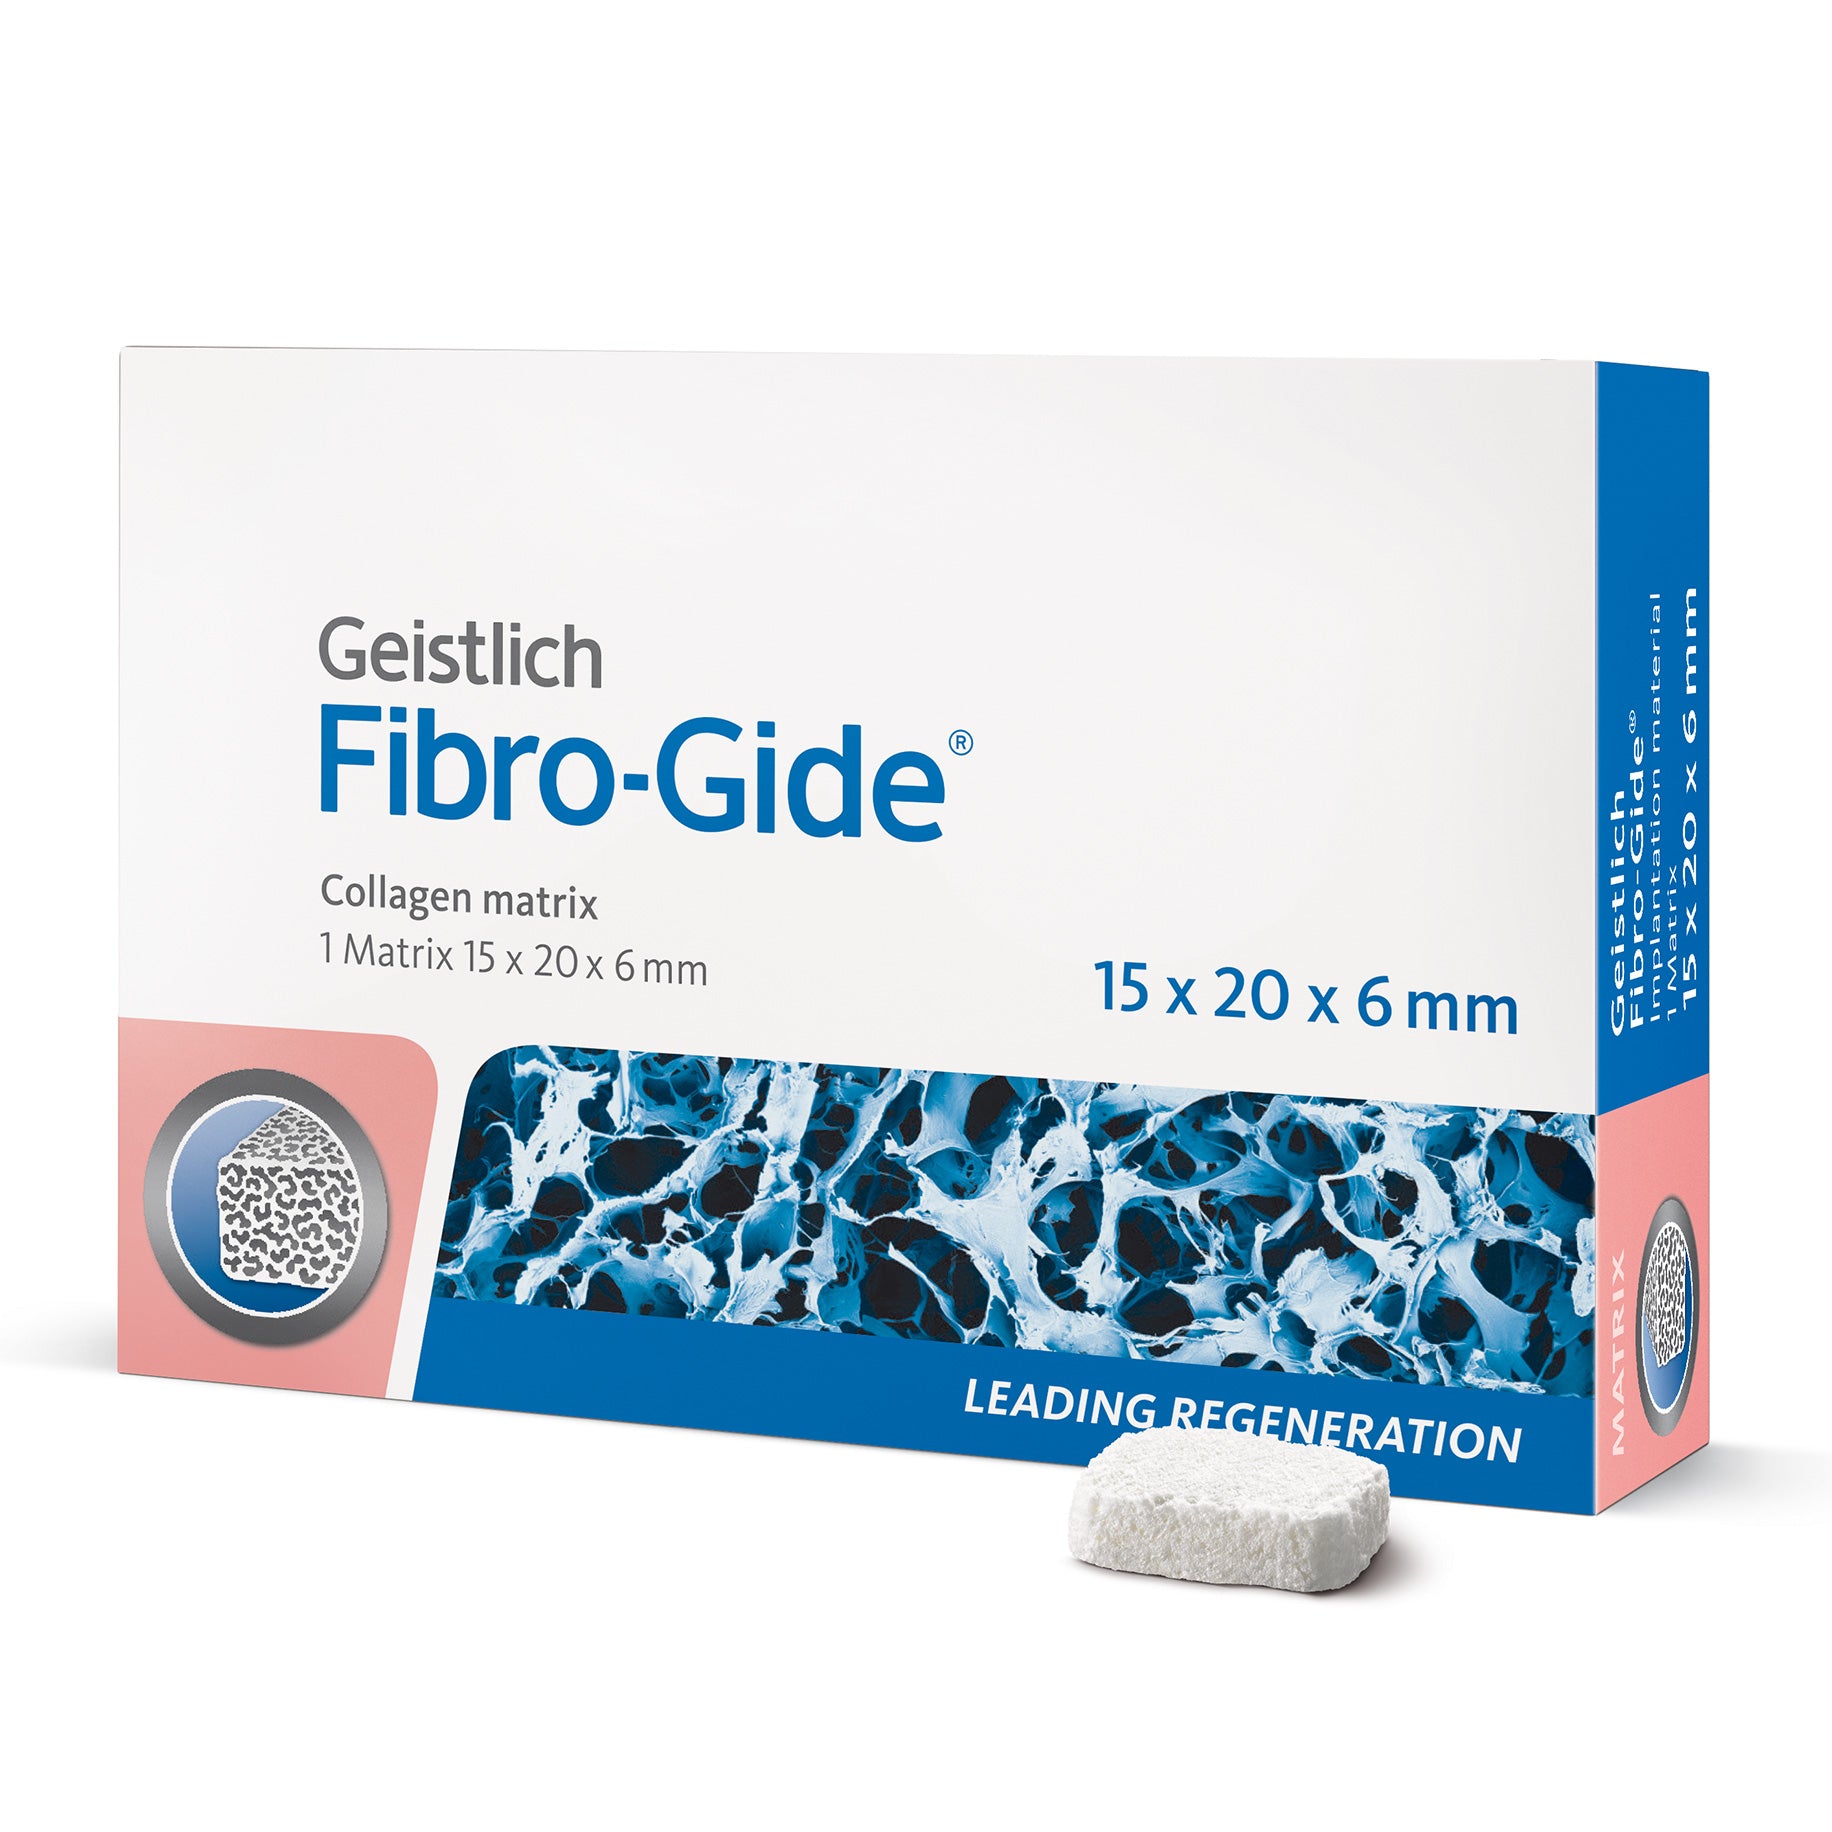 Fibro-Gide 15 x 20 x 6mm